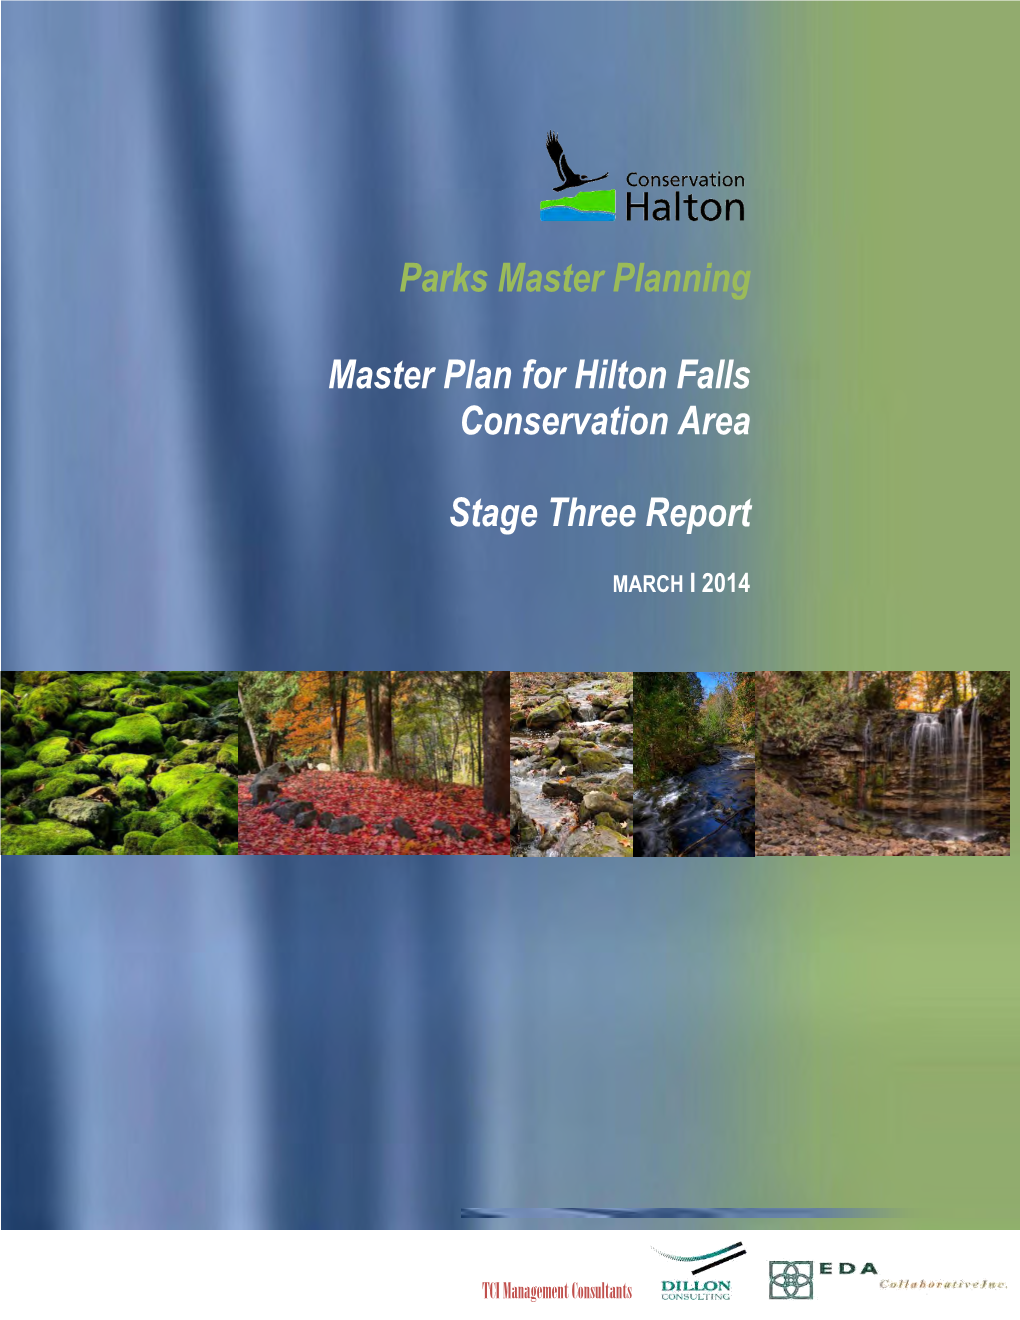 Hilton Falls Conservation Area